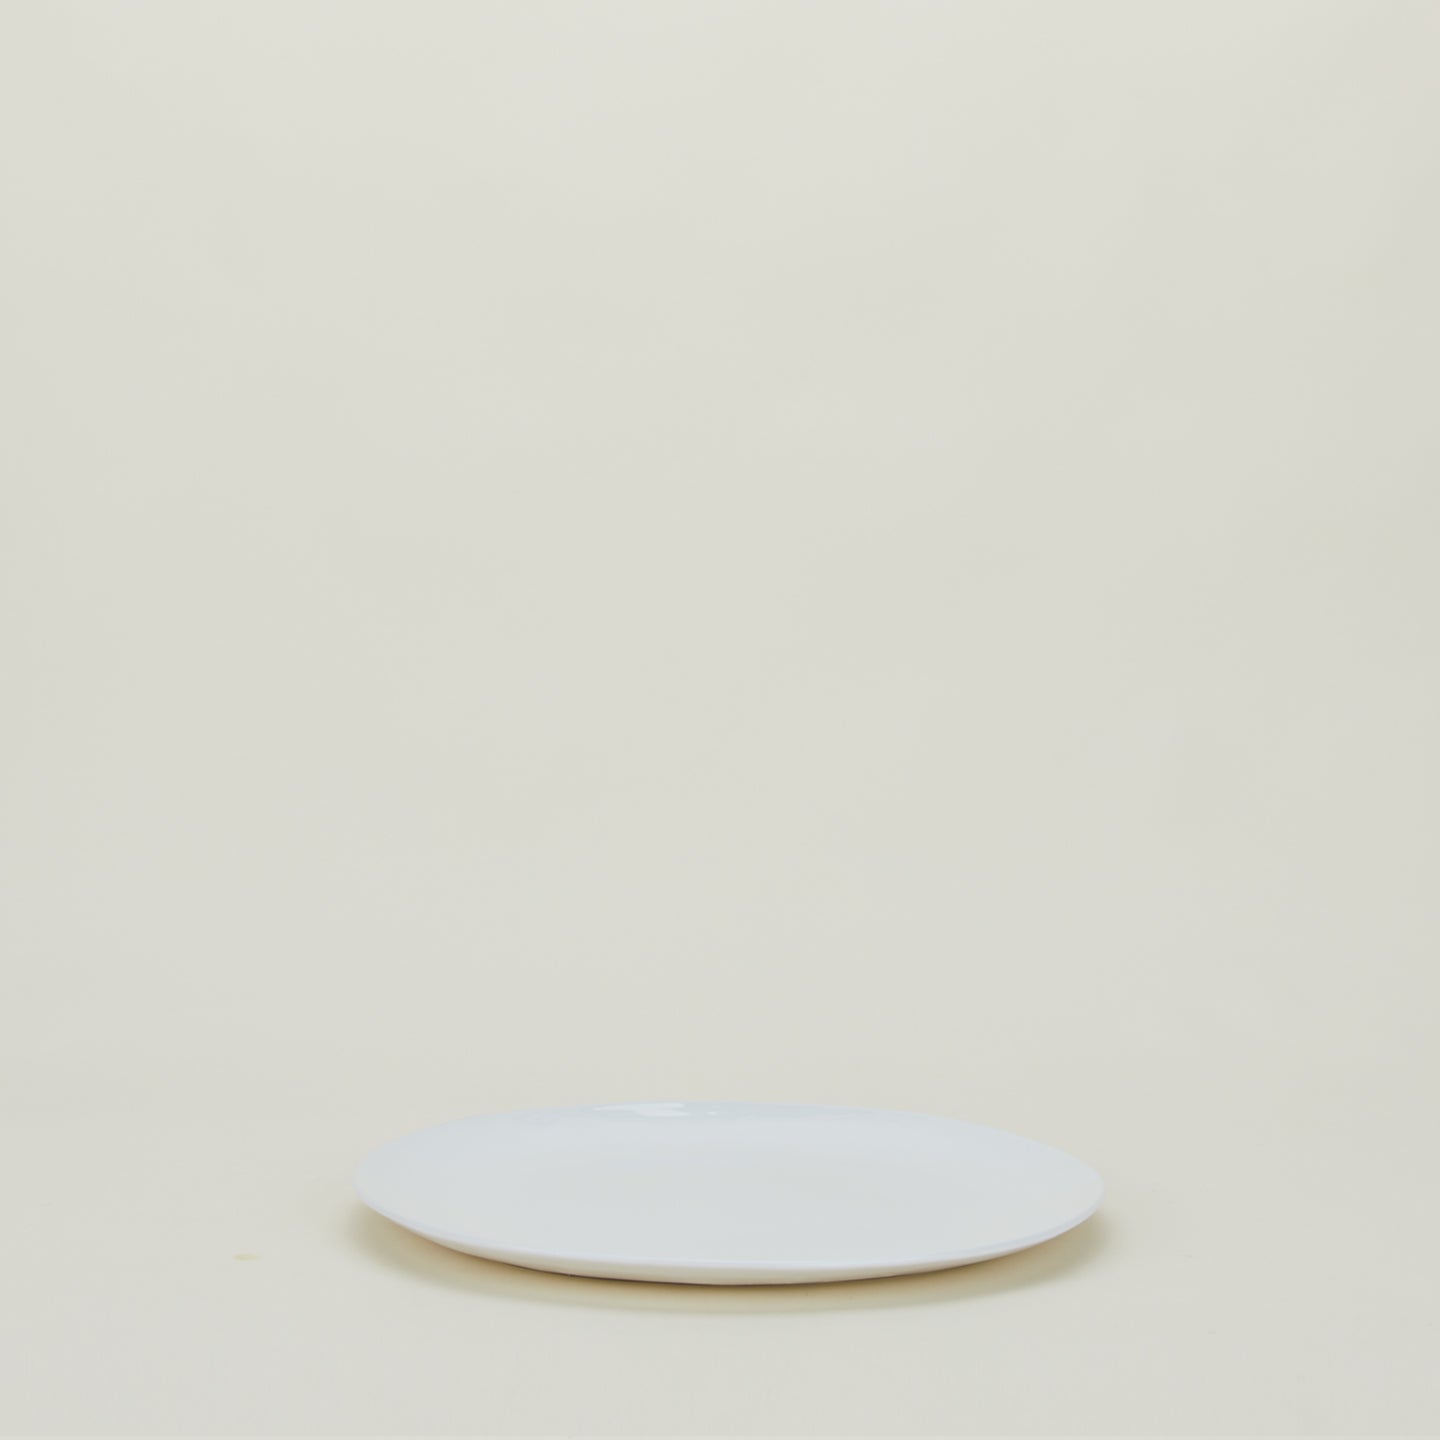 Organic Round Serving Platter - White